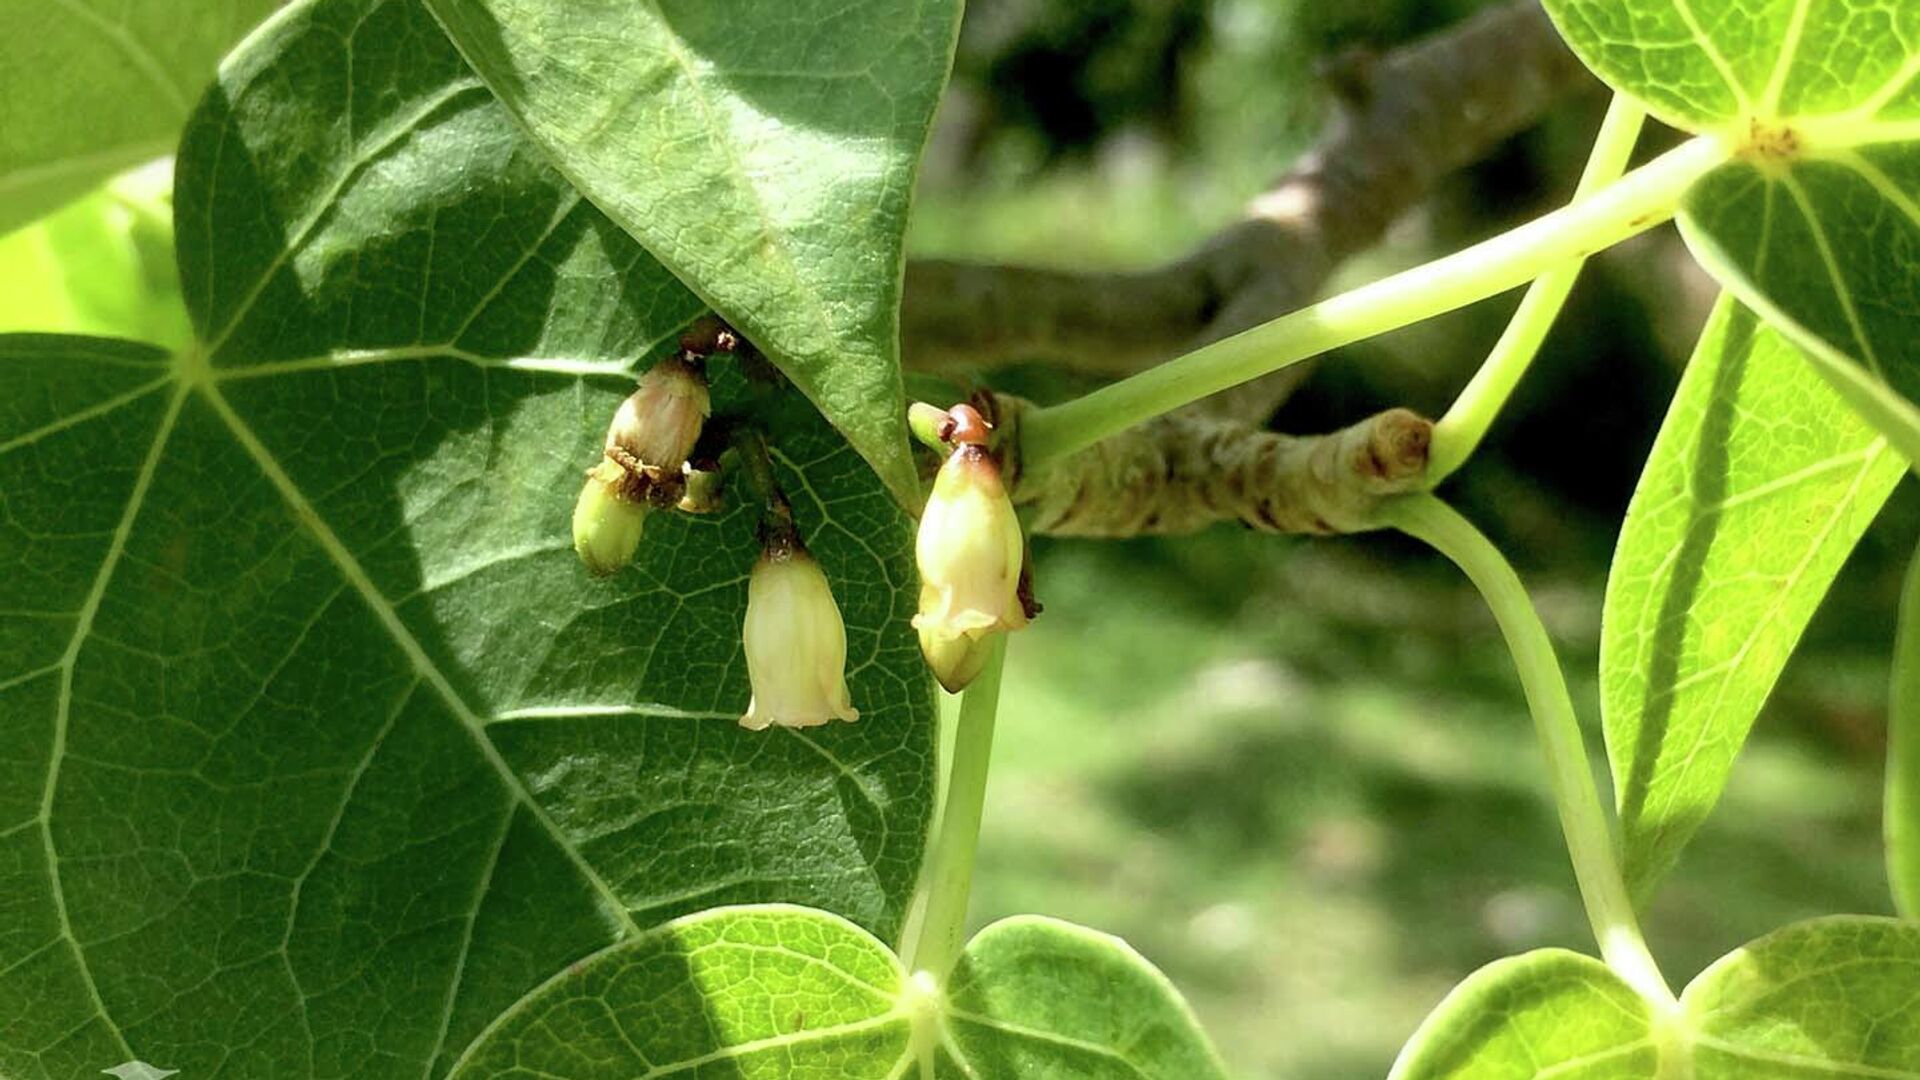 Pomolché (Jatropha gaumeri), una planta endémica de Yucatán, México - Sputnik Mundo, 1920, 29.12.2021